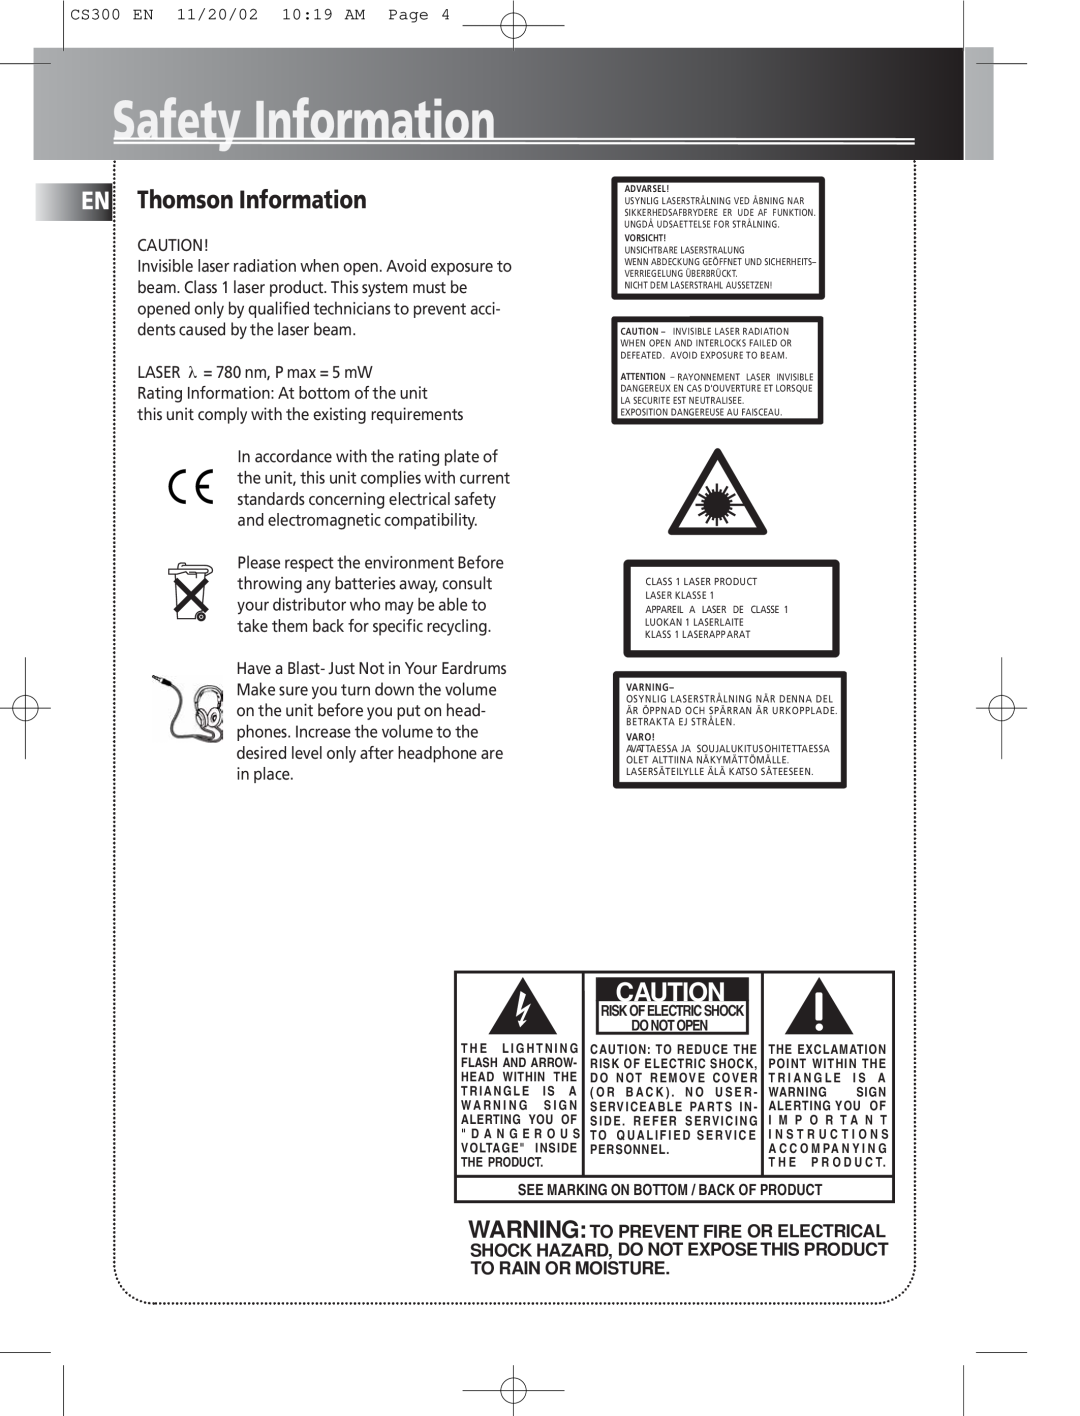 Technicolor - Thomson manual Safety Information, EN Thomson Information, CS300 EN 11/20/02 10 19 AM Page, Do Not Open 